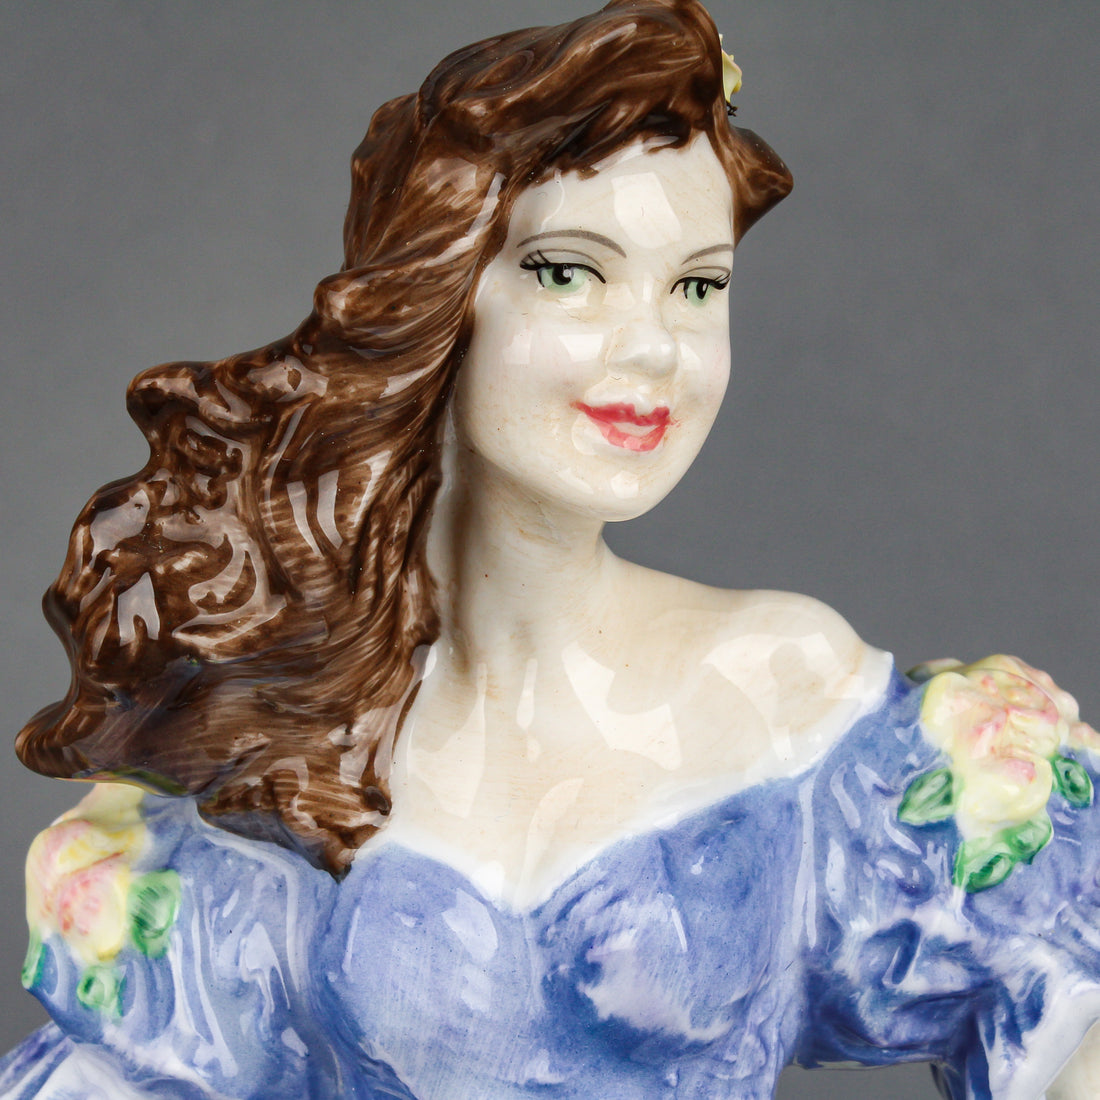 ROYAL DOULTON Rebecca HN 4041 Figurine